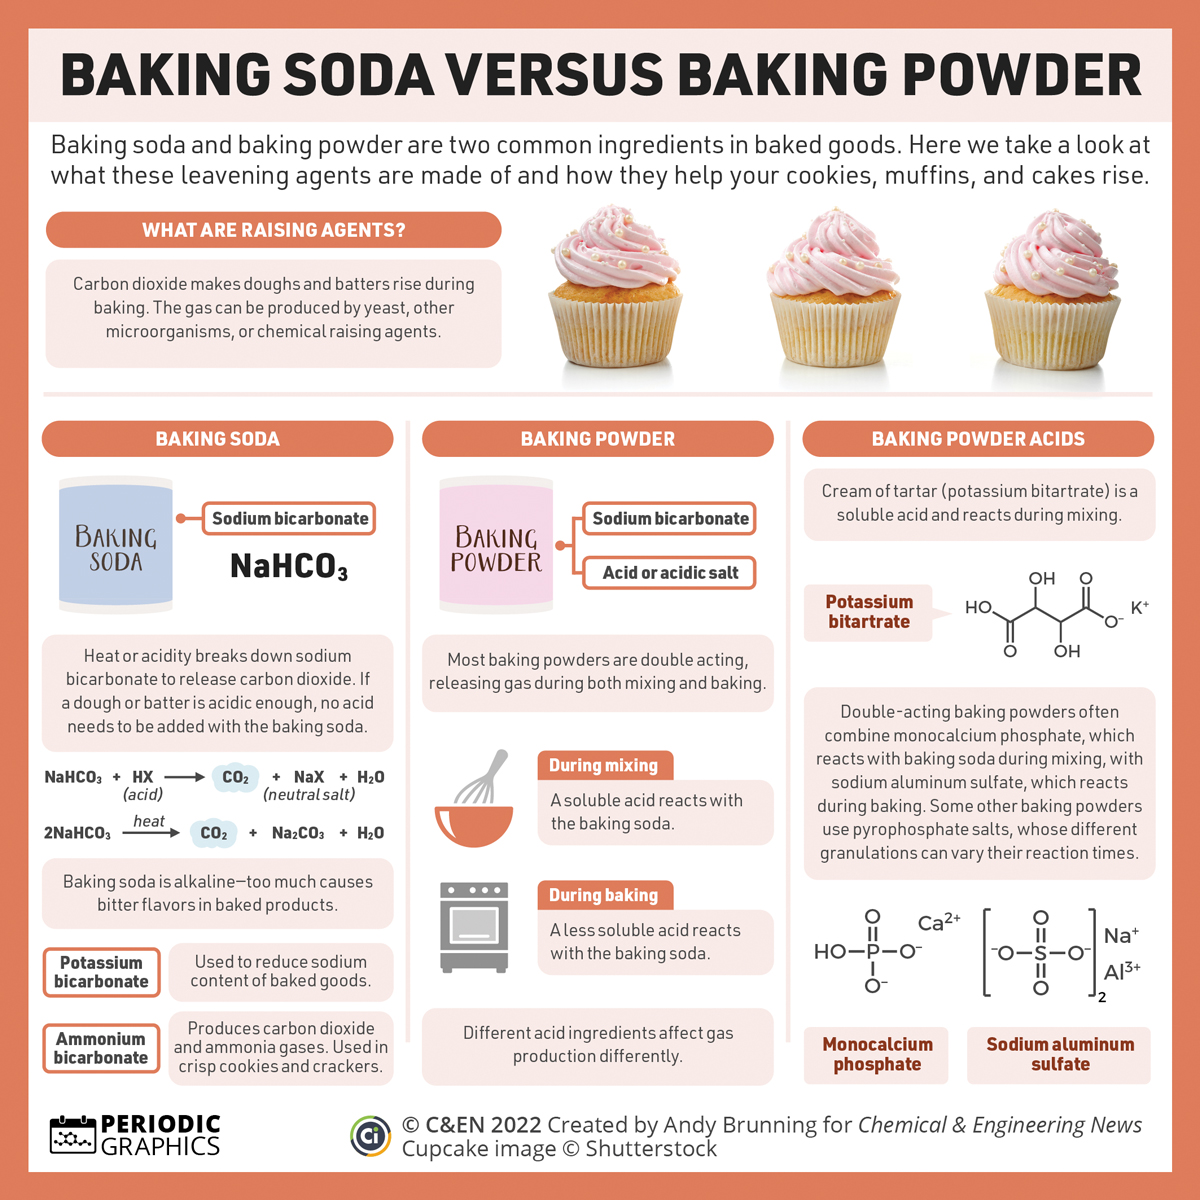 Baking Soda vs Baking Powder